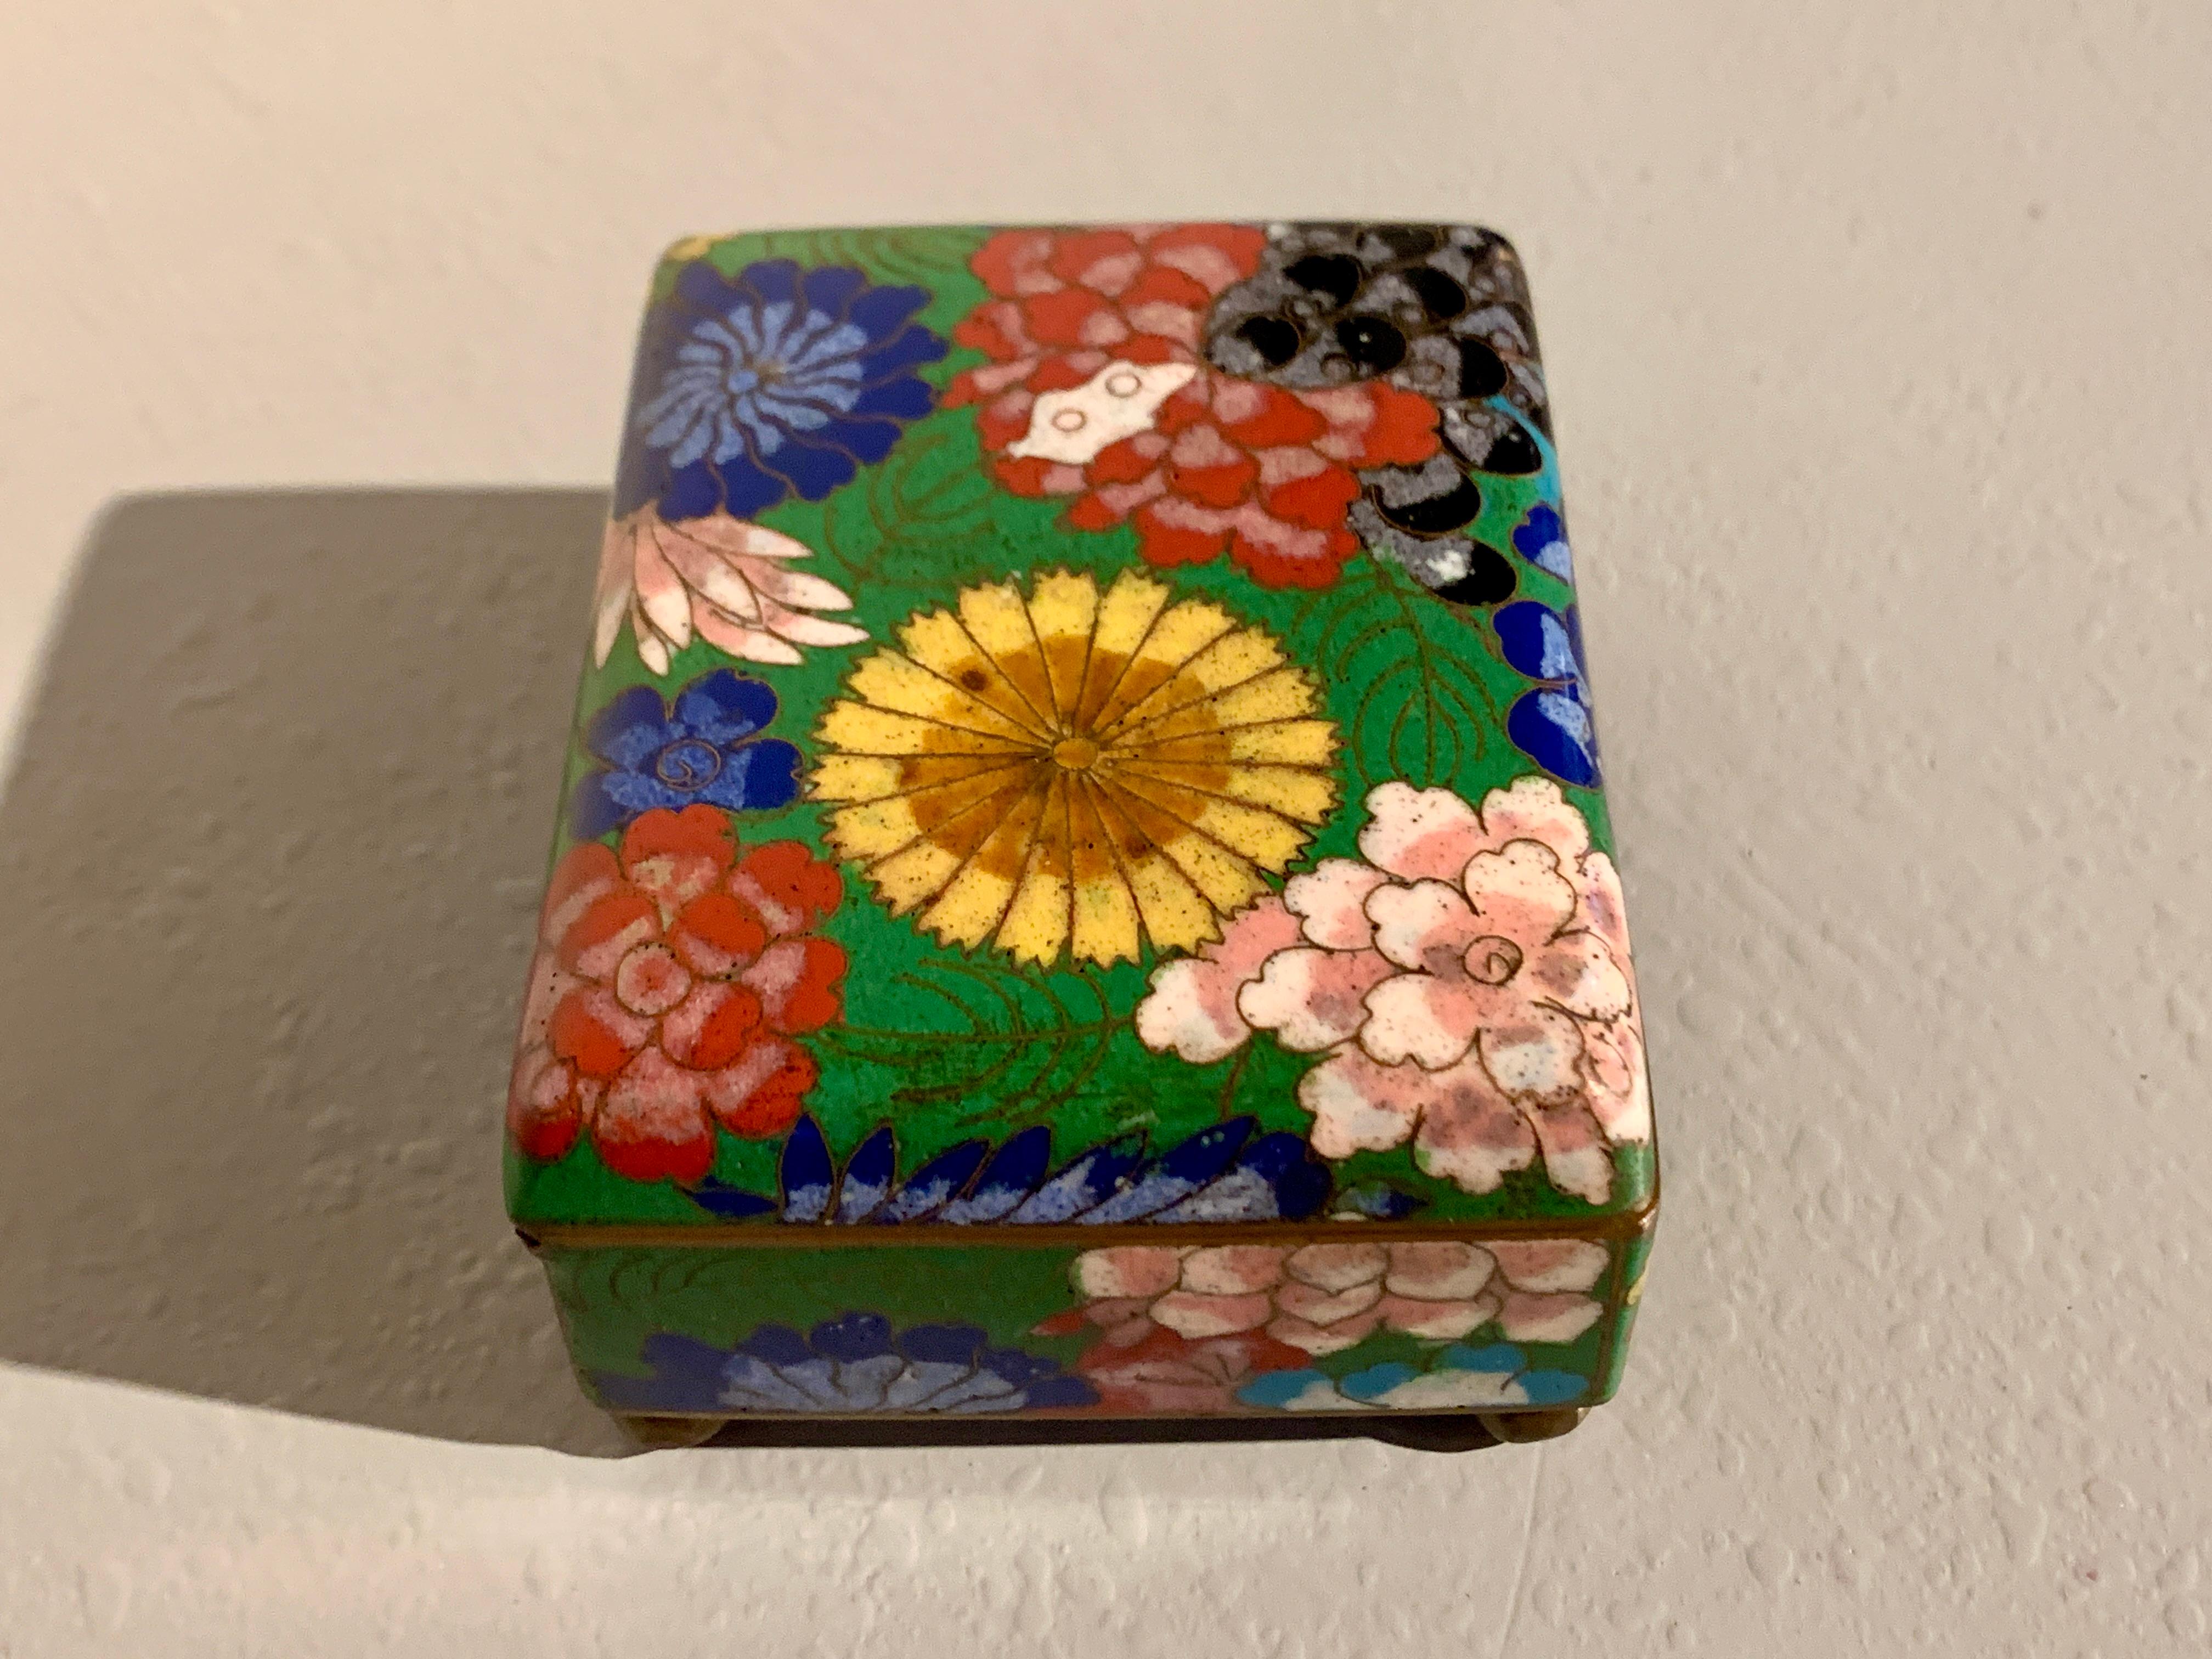 Cloissoné Small Chinese Floral Cloisonne Trinket Box, Republic Period, circa 1930s, China